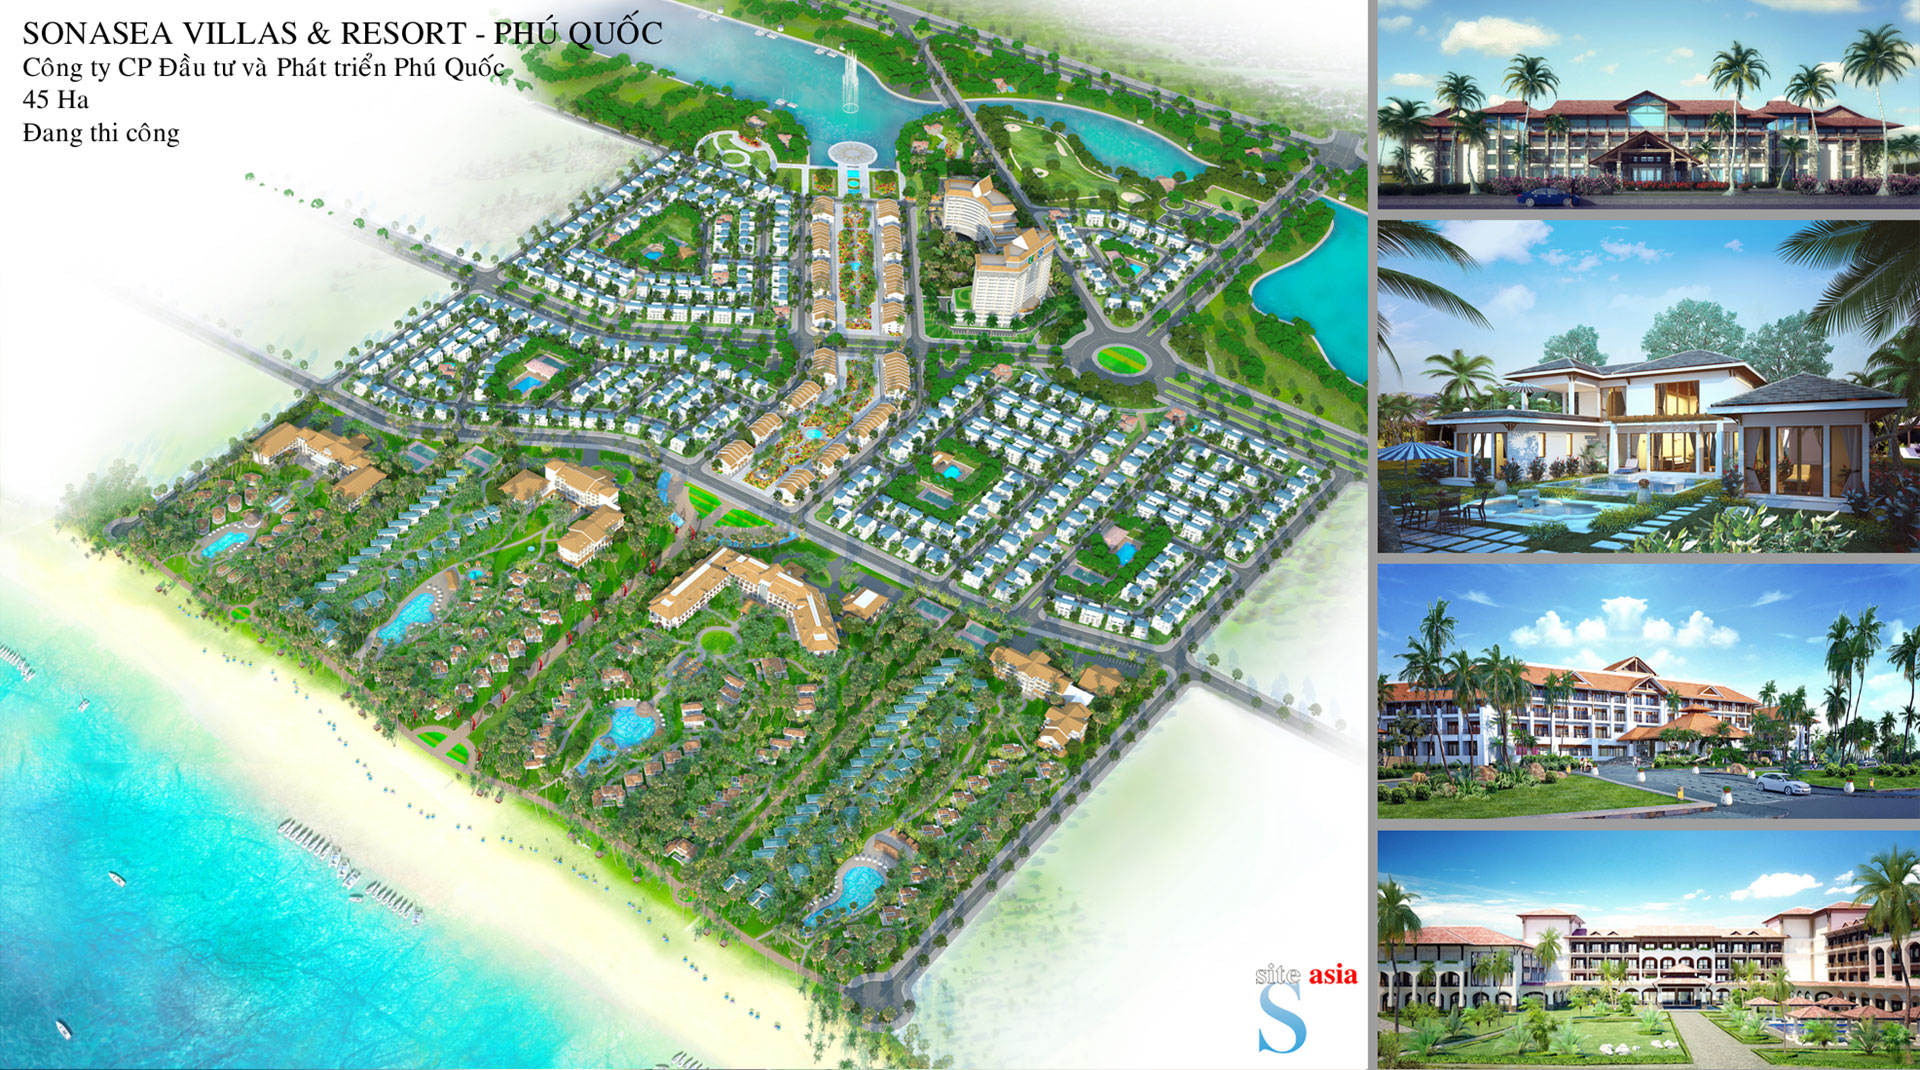 Sonasea Villas & Resort, Phu Quoc